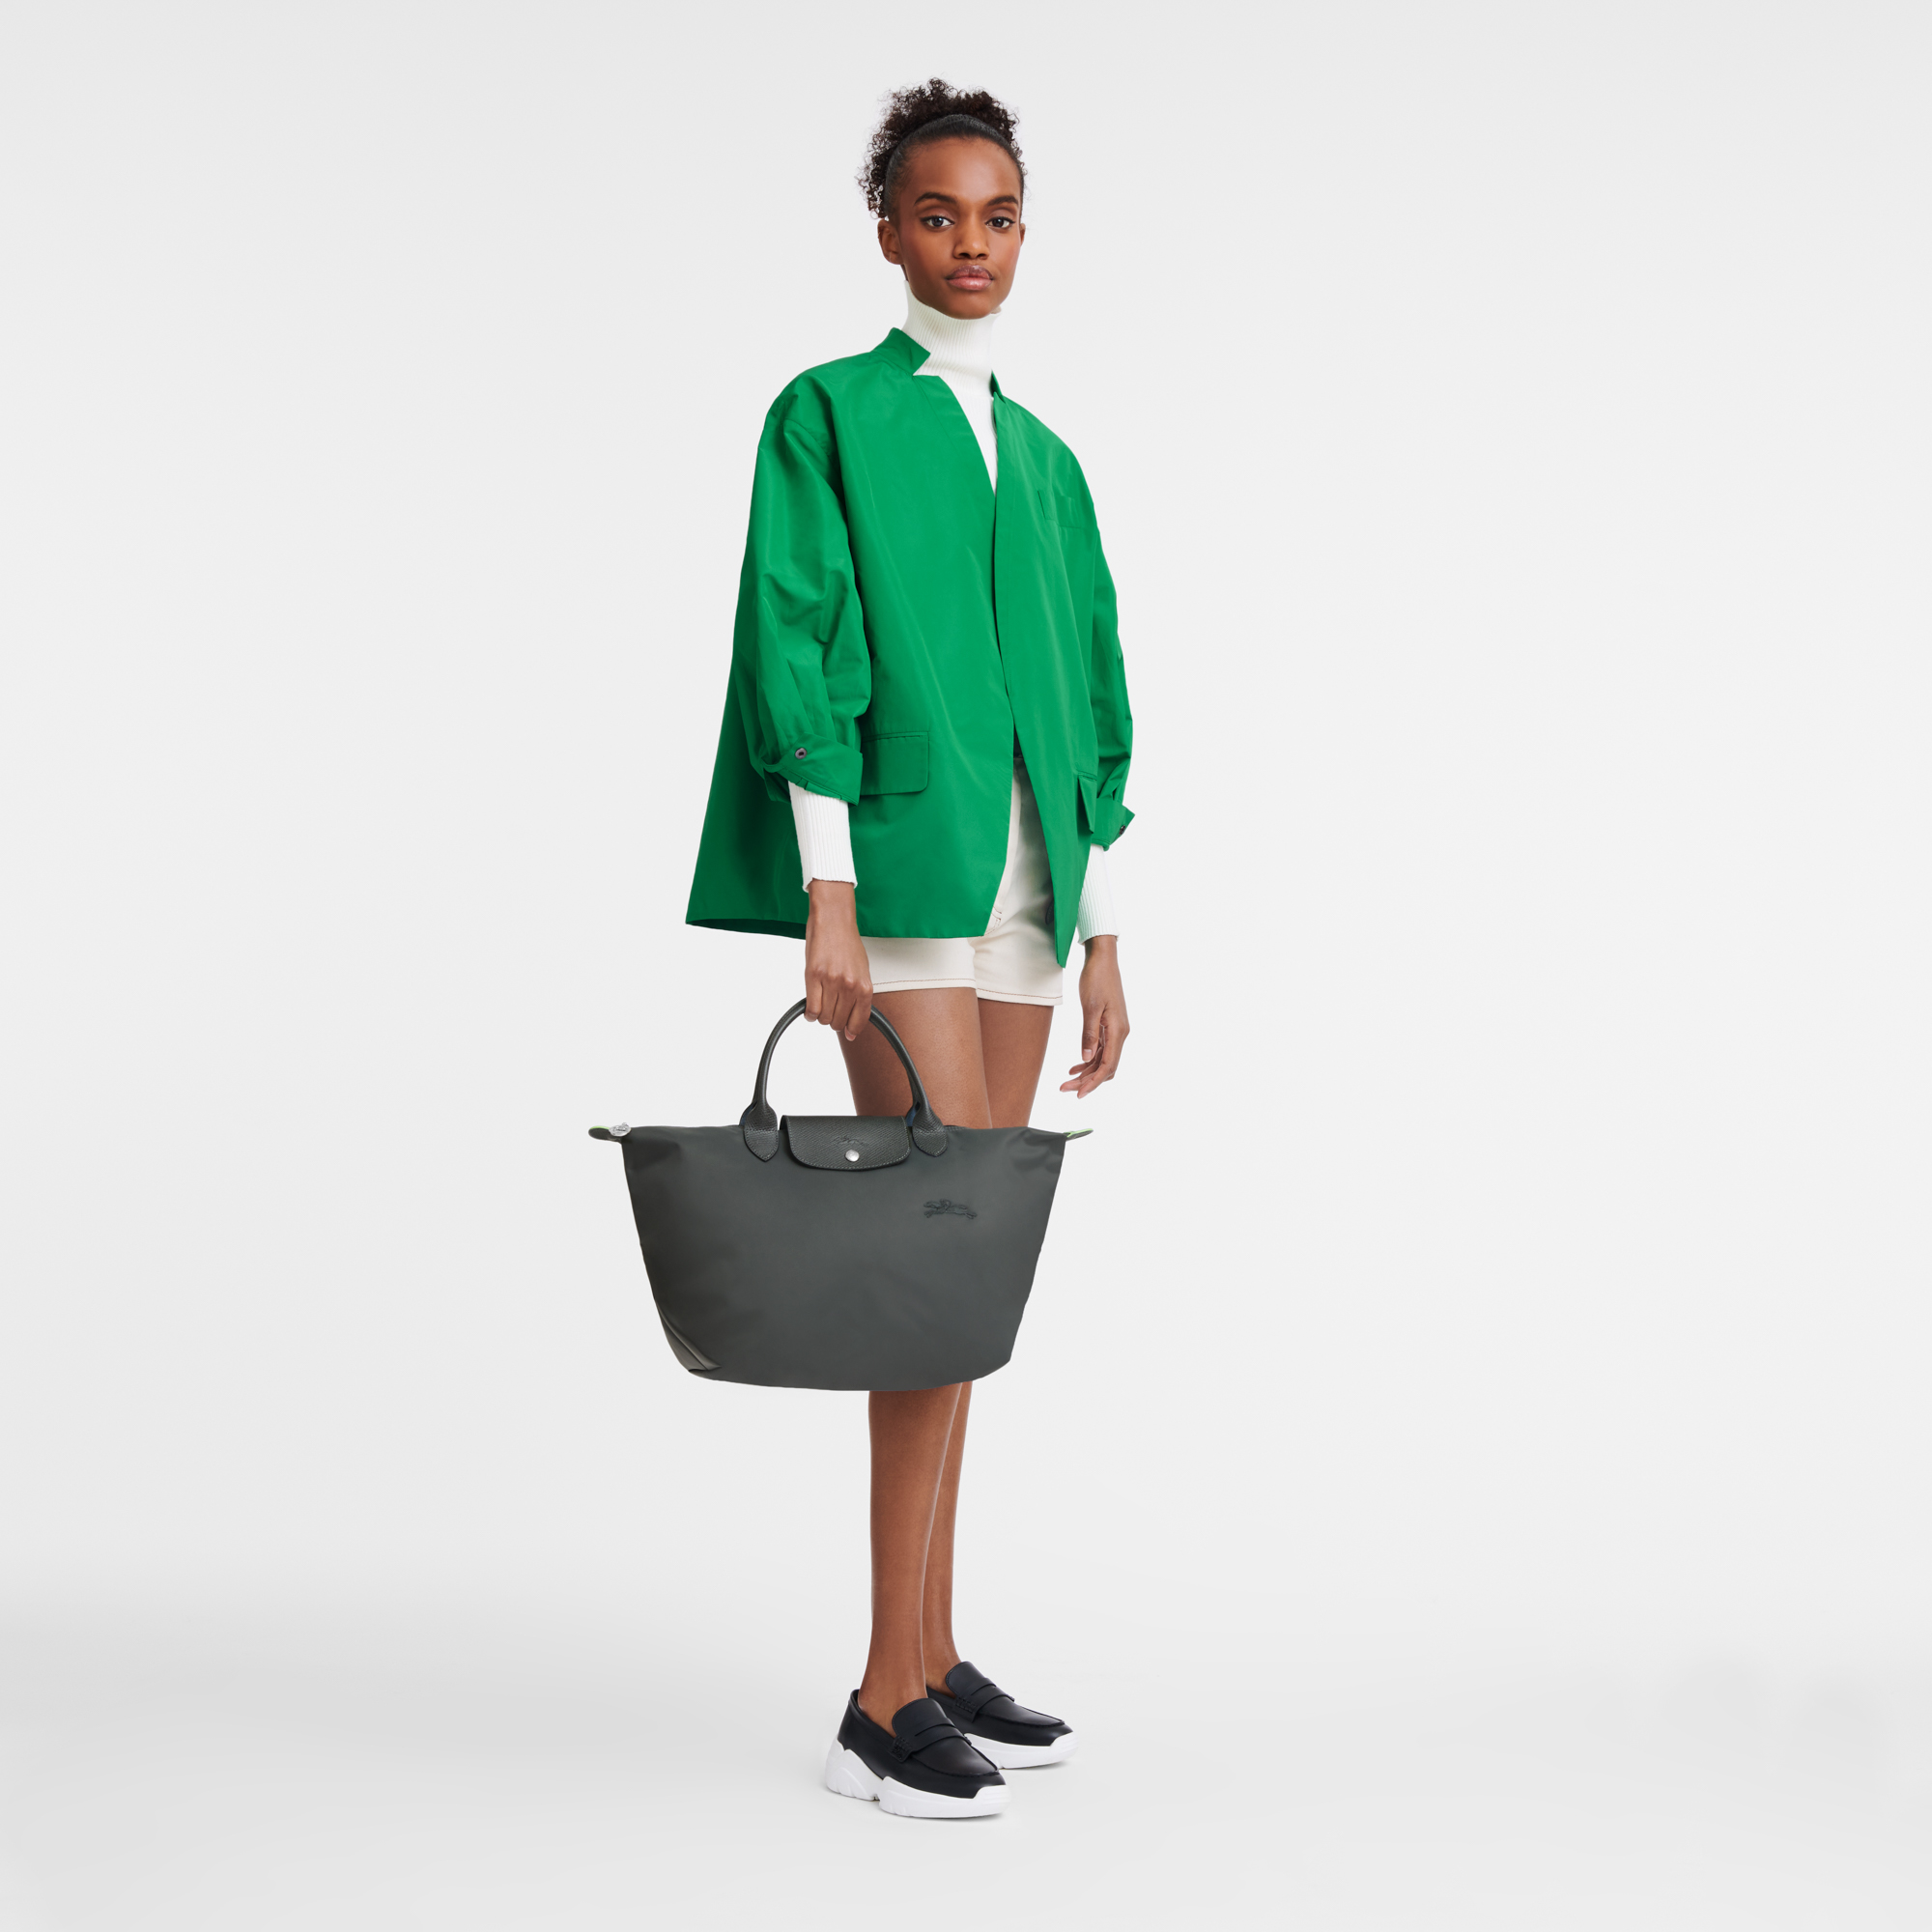 Le Pliage Green Handtasche M, Graphitgrau